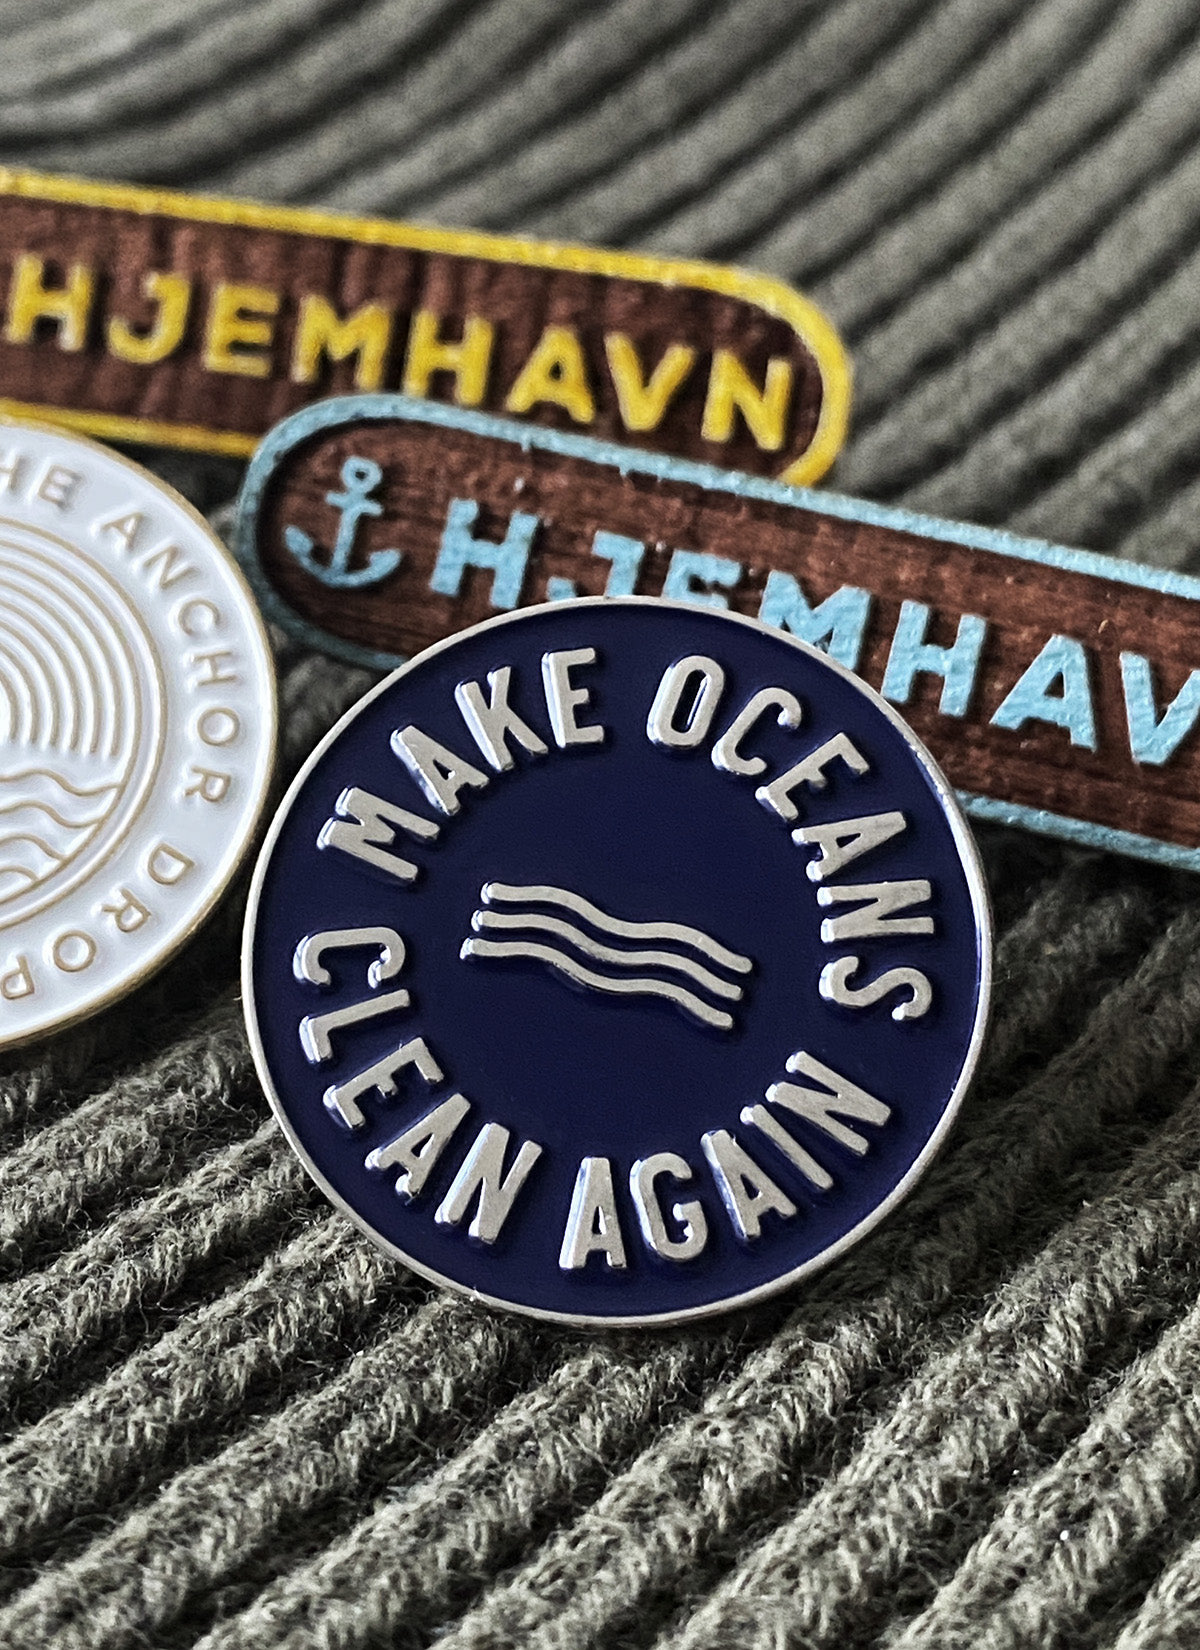 Pin - "Make Oceans Clean Again"